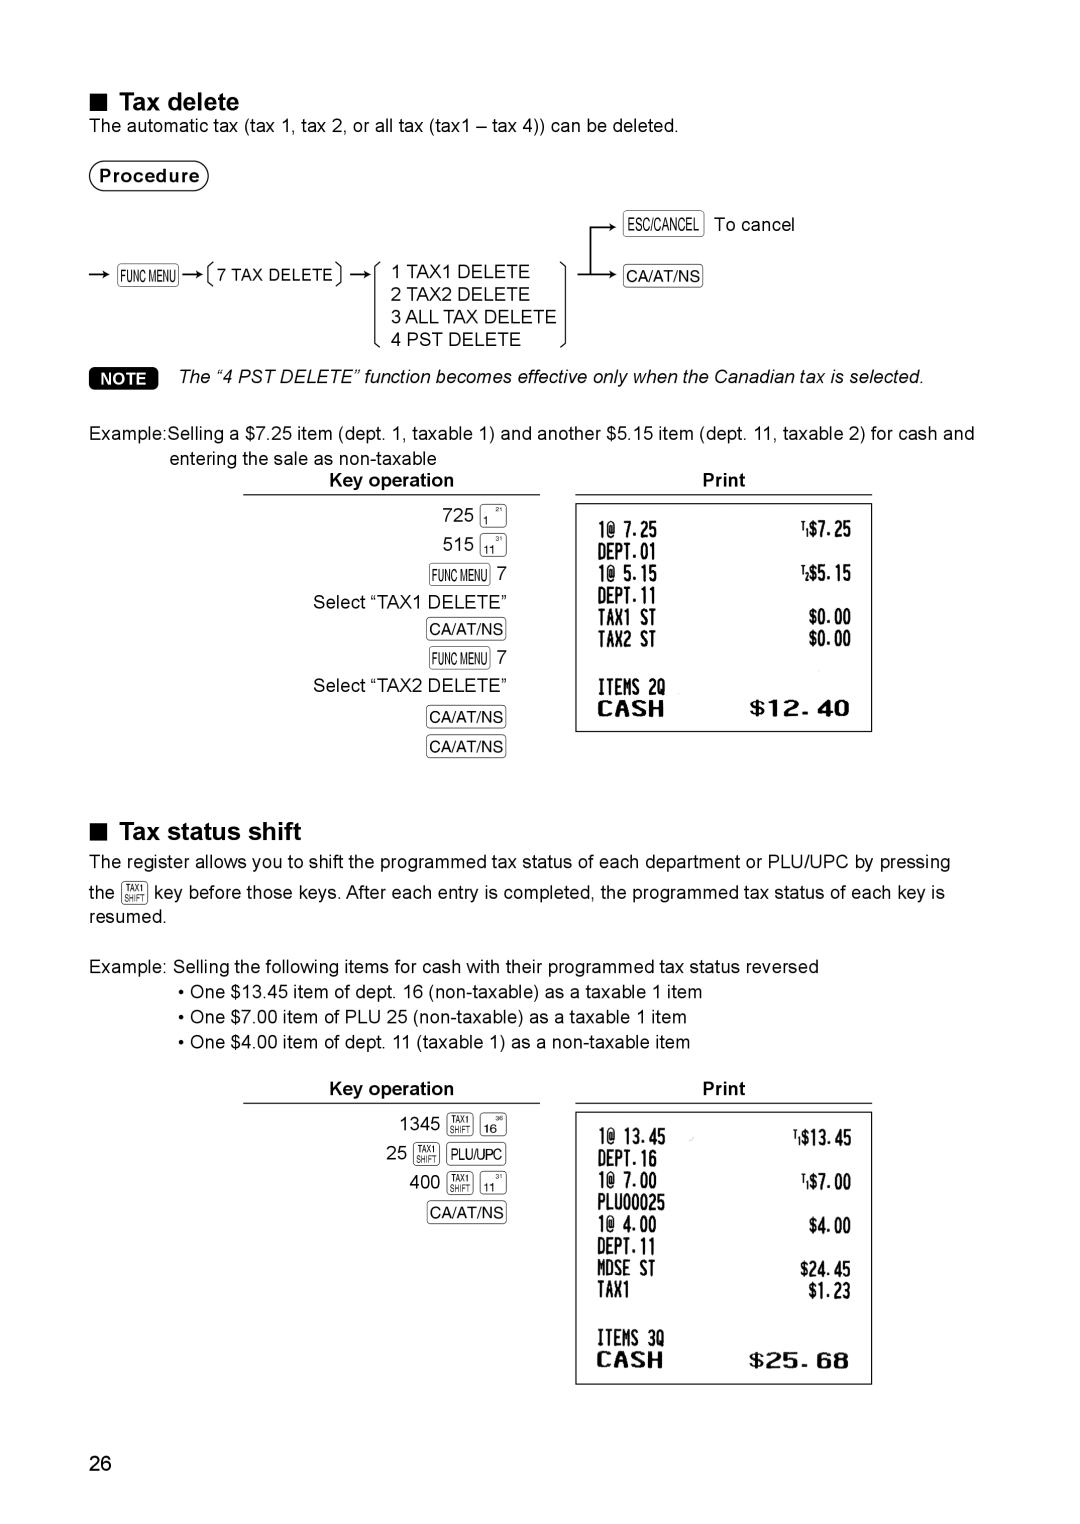 Sharp ER-A347A instruction manual 725 515 q, 25 wp 400 wq A, Tax delete, Tax status shift 